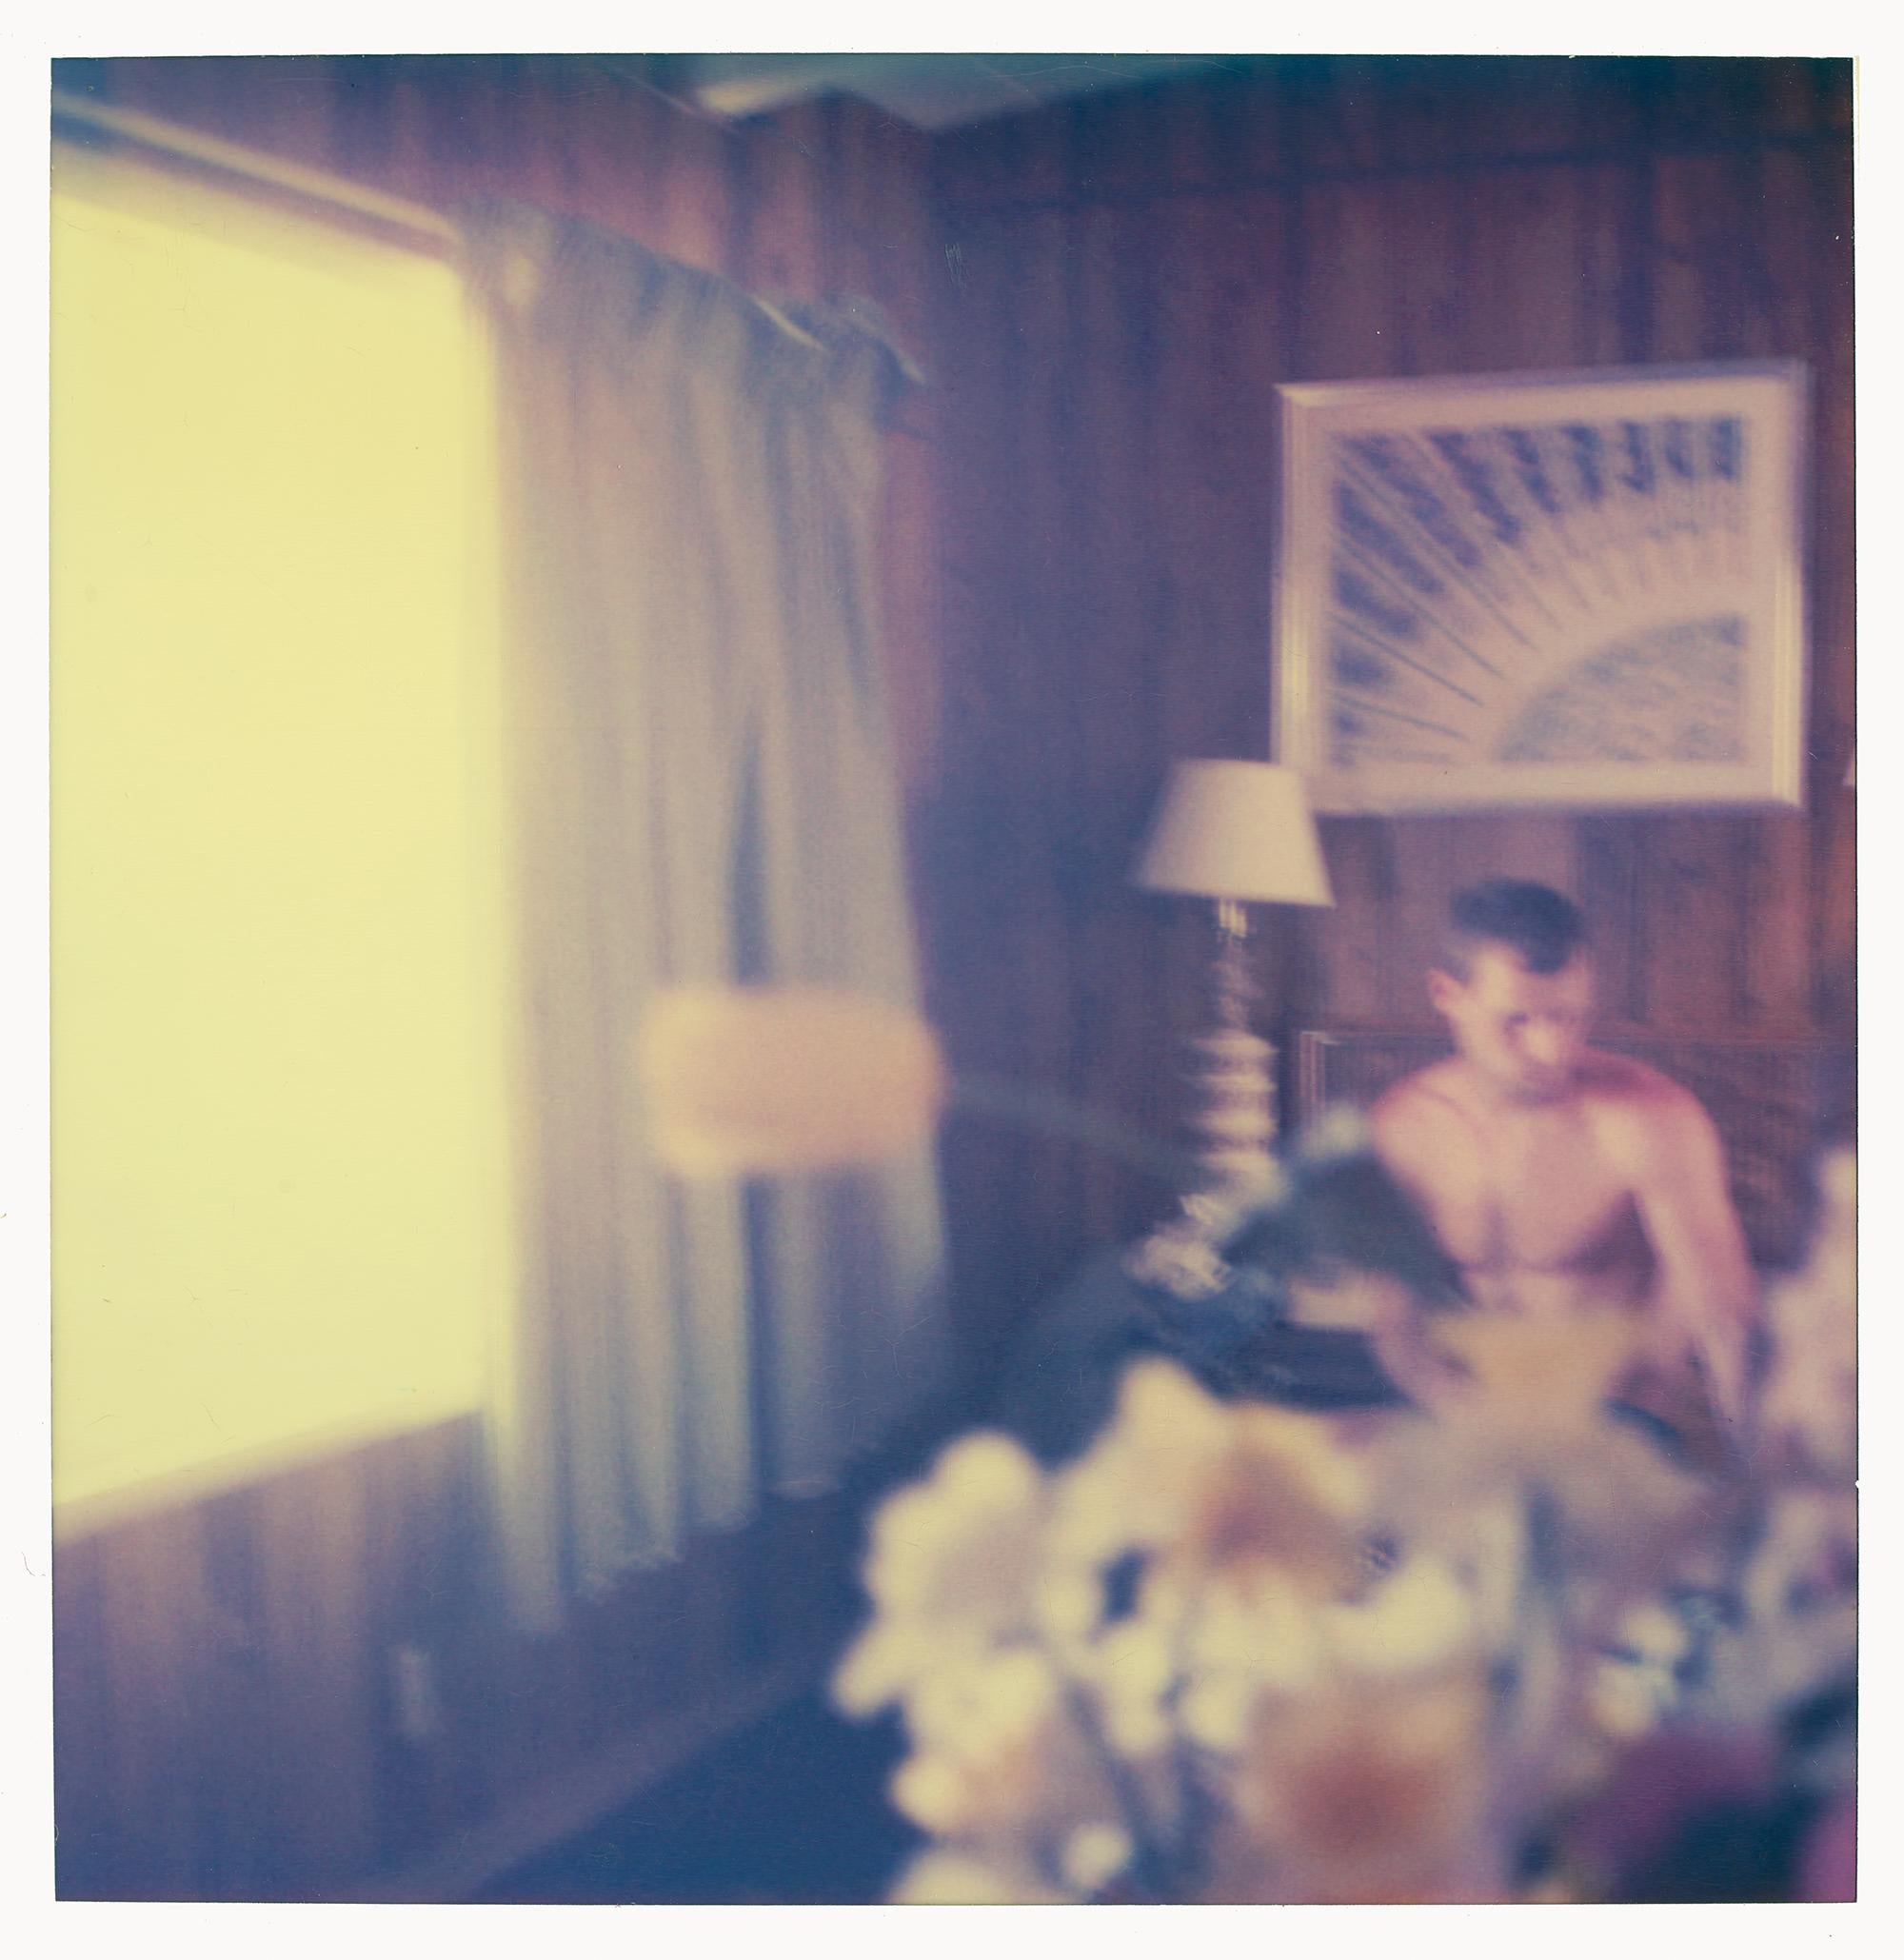 Stefanie Schneider Nude Photograph - Outtake (29 Palms, CA) - analog, Polaroid, Contemporary